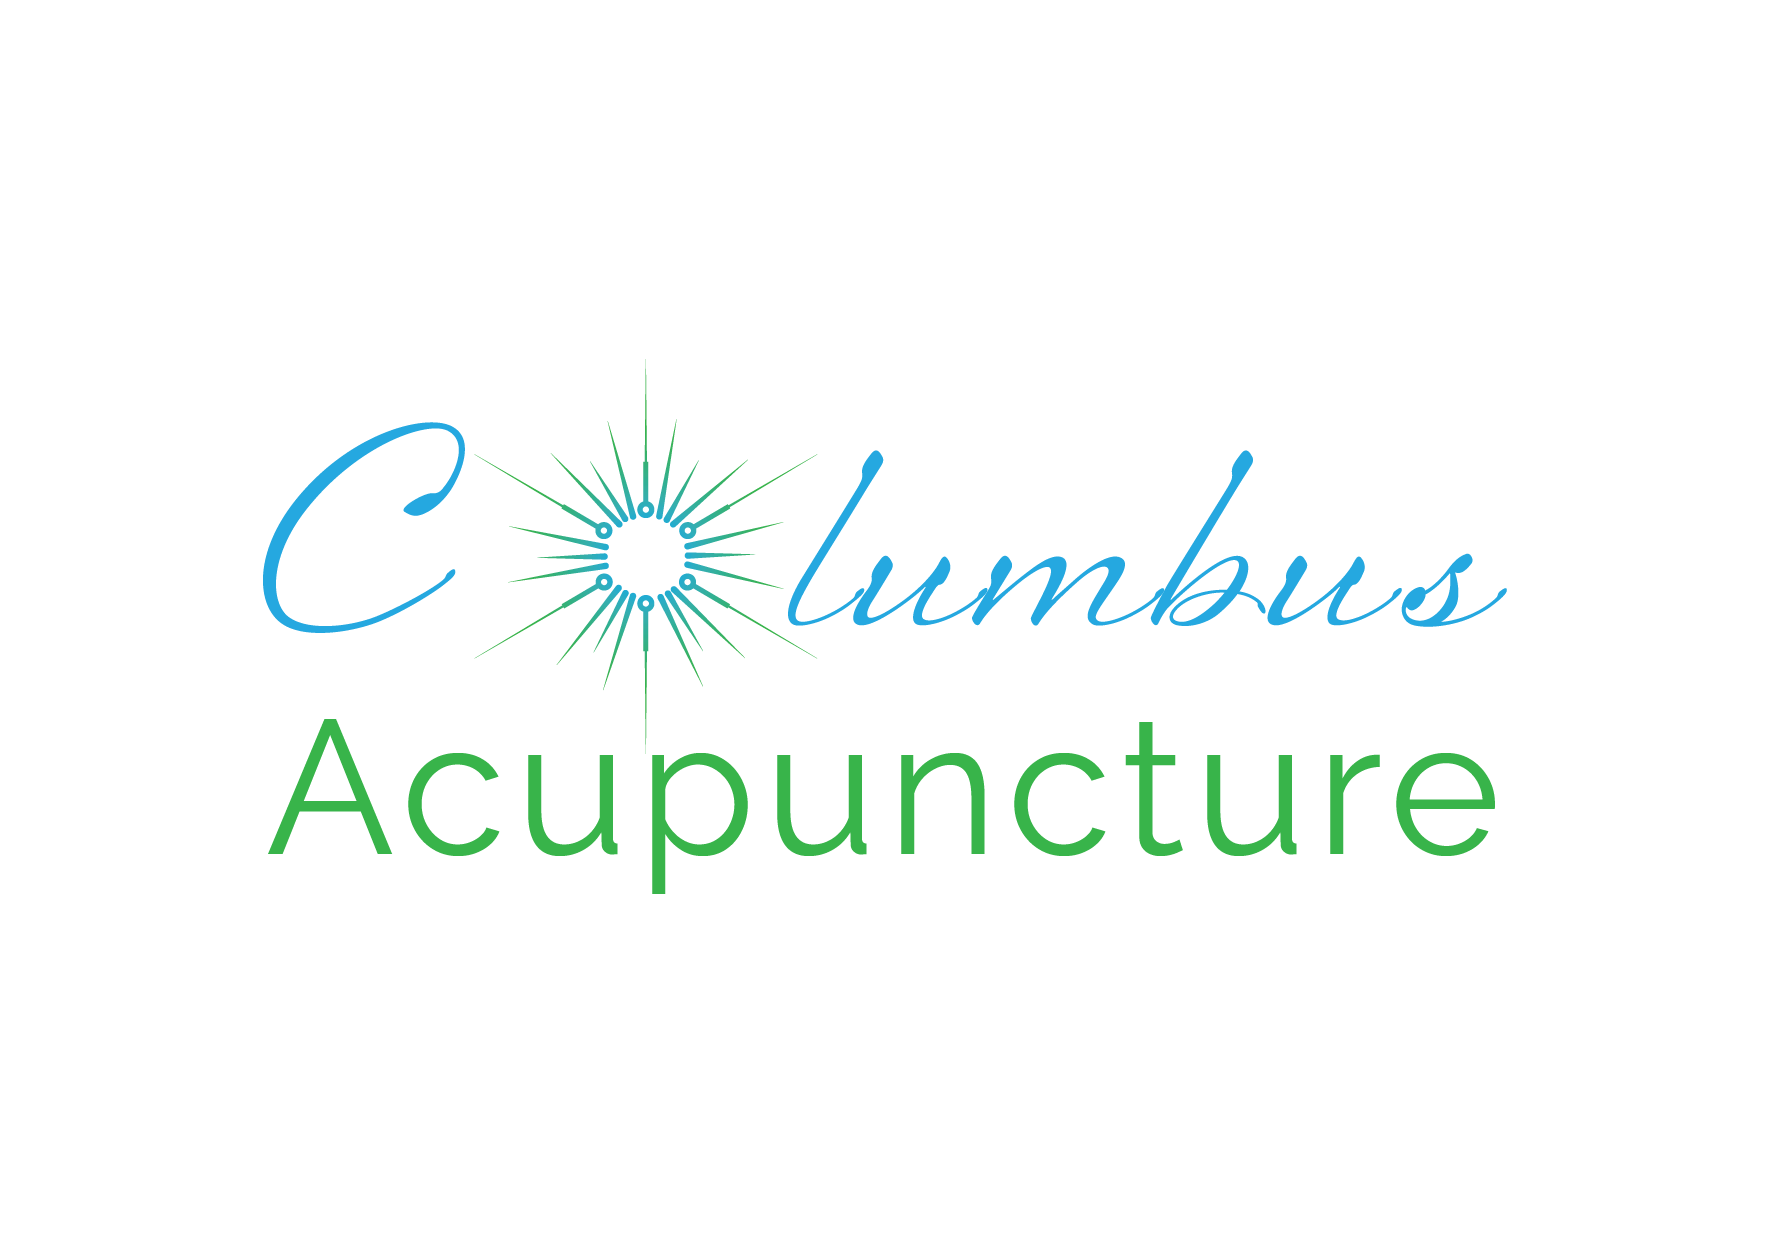 Columbus_Acupuncture_Secondary_Full_Color-01